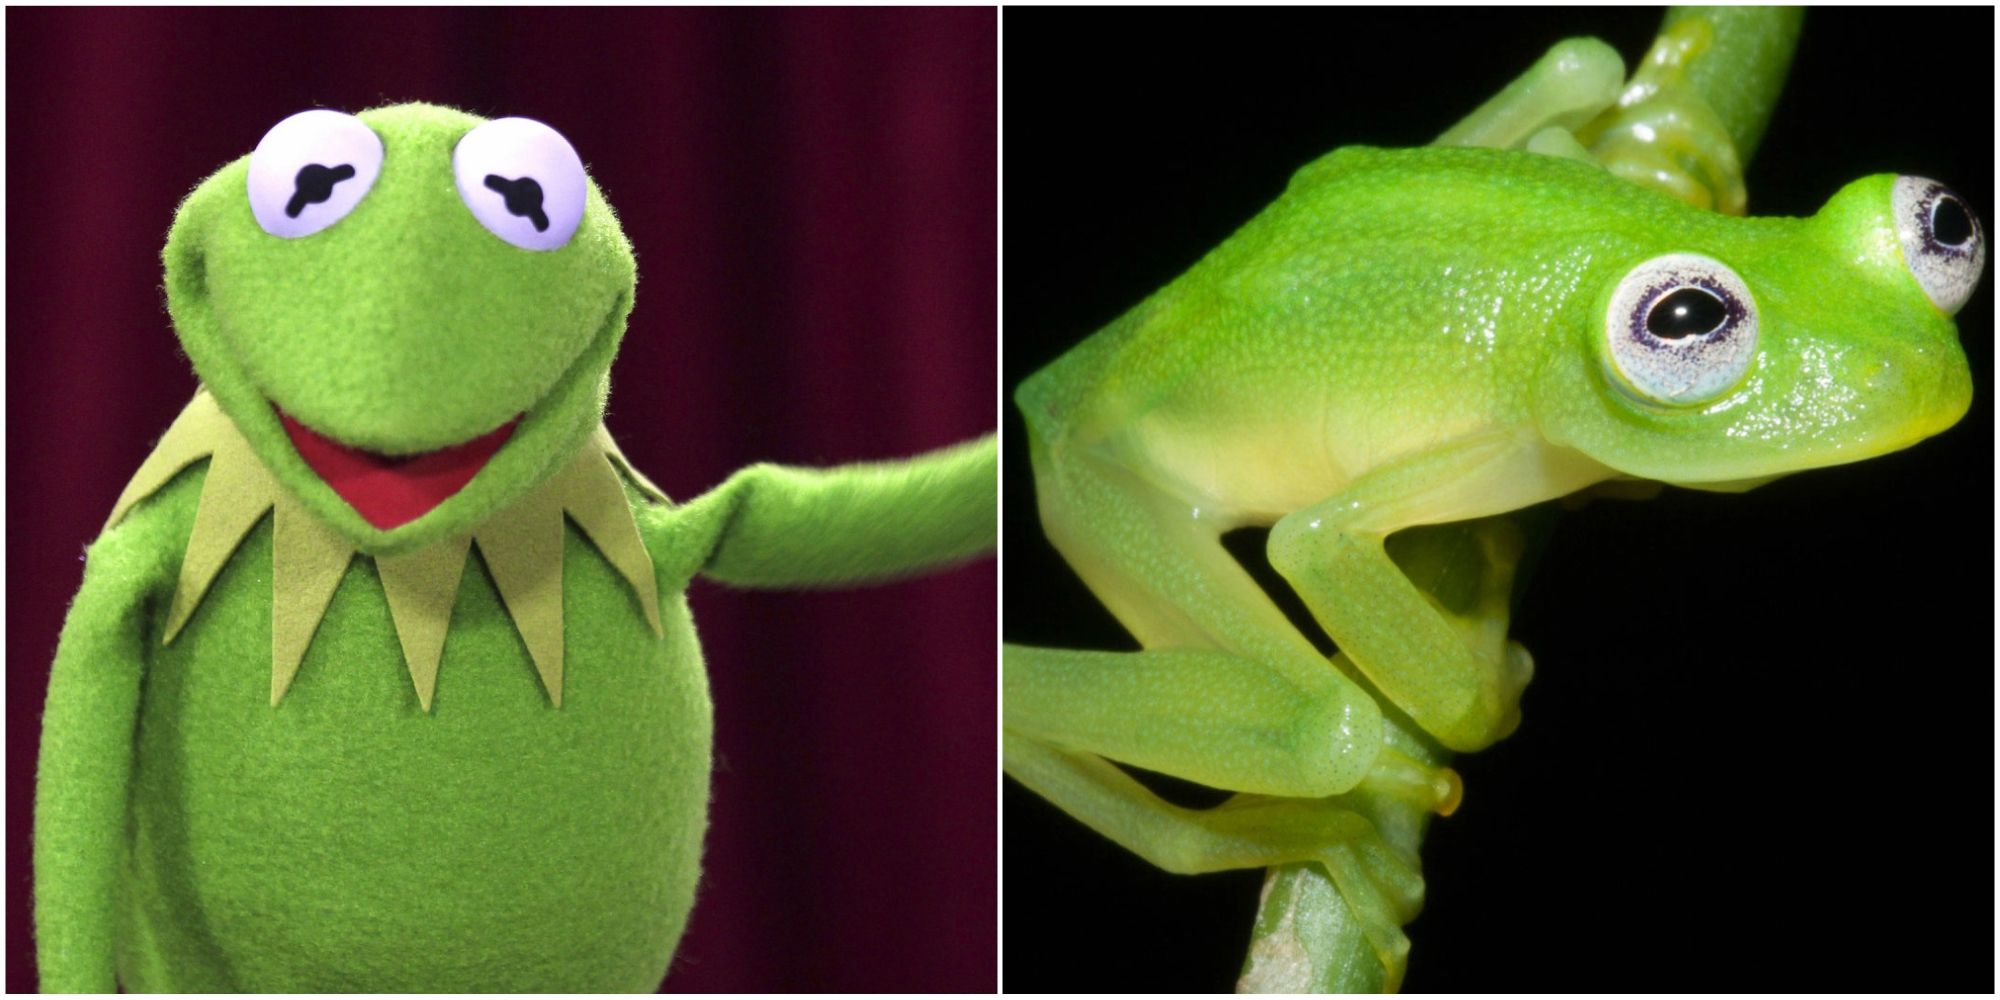 6 Hyalinobatrachium dianae AKA "The Kermit Frog" .